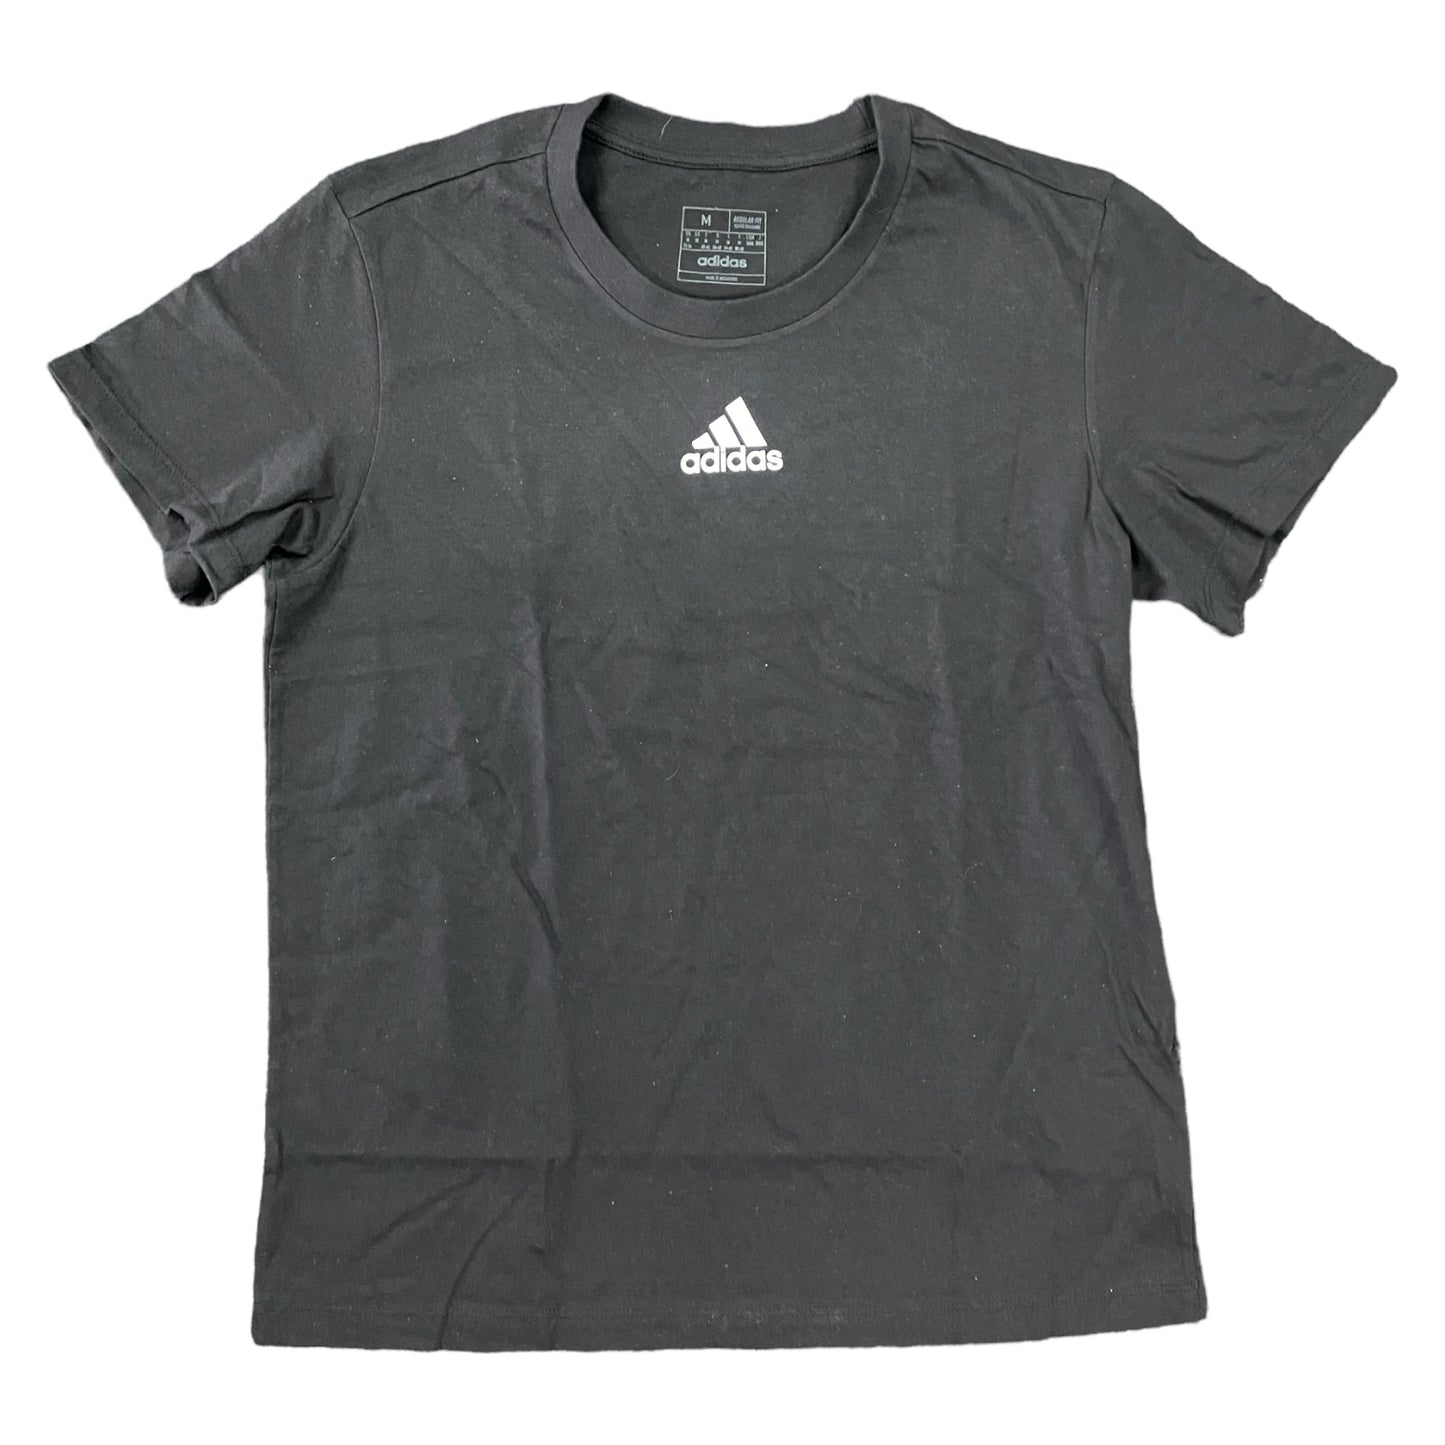 Adidas Women's BOS Active Short Sleeve Regular Fit Tee Shirt